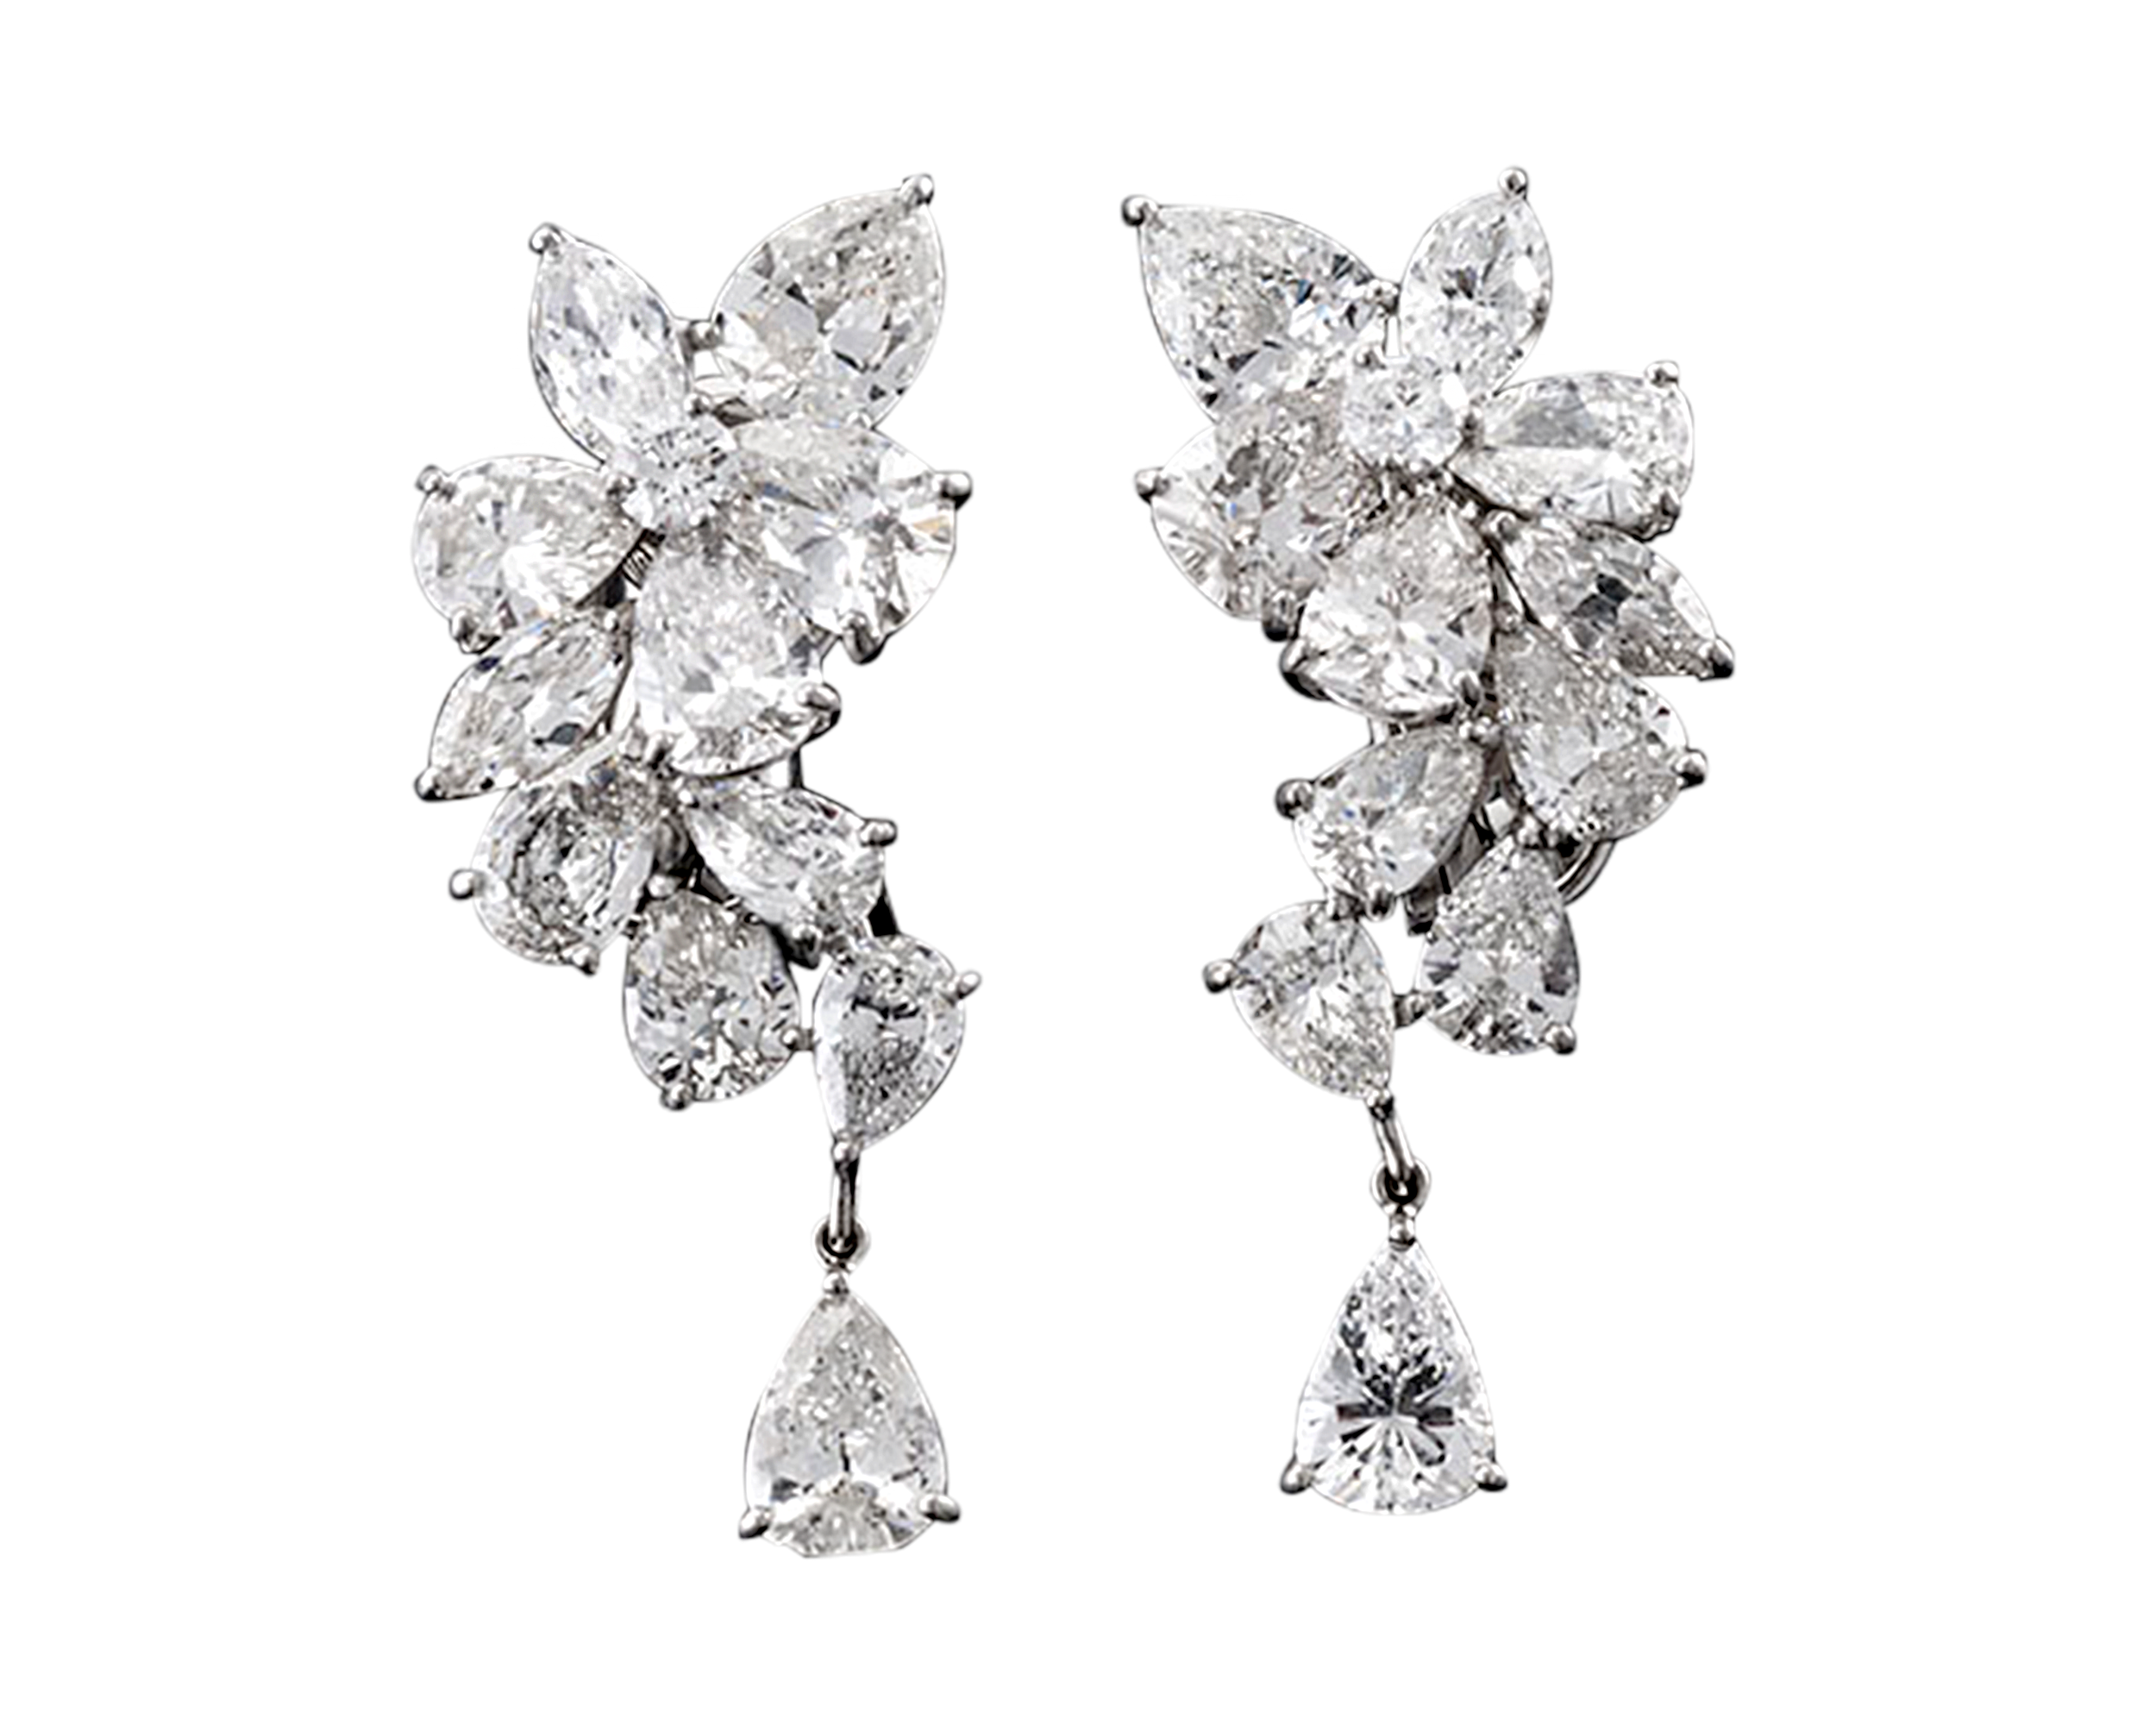 Diamond Cluster Drop Earrings, 11.30 Carats